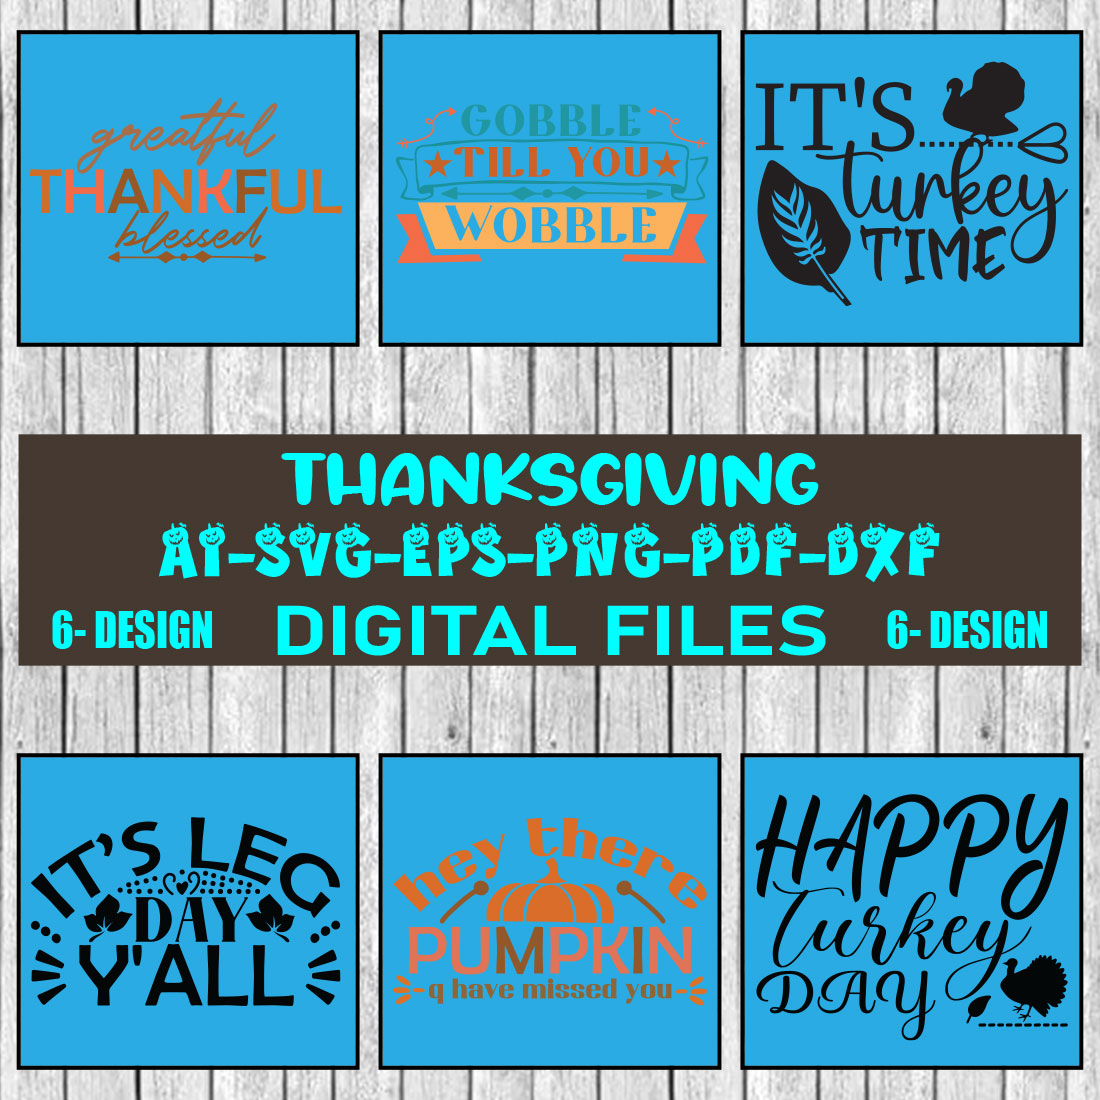 Thanksgiving Bundle SVG Files Vol-04 cover image.